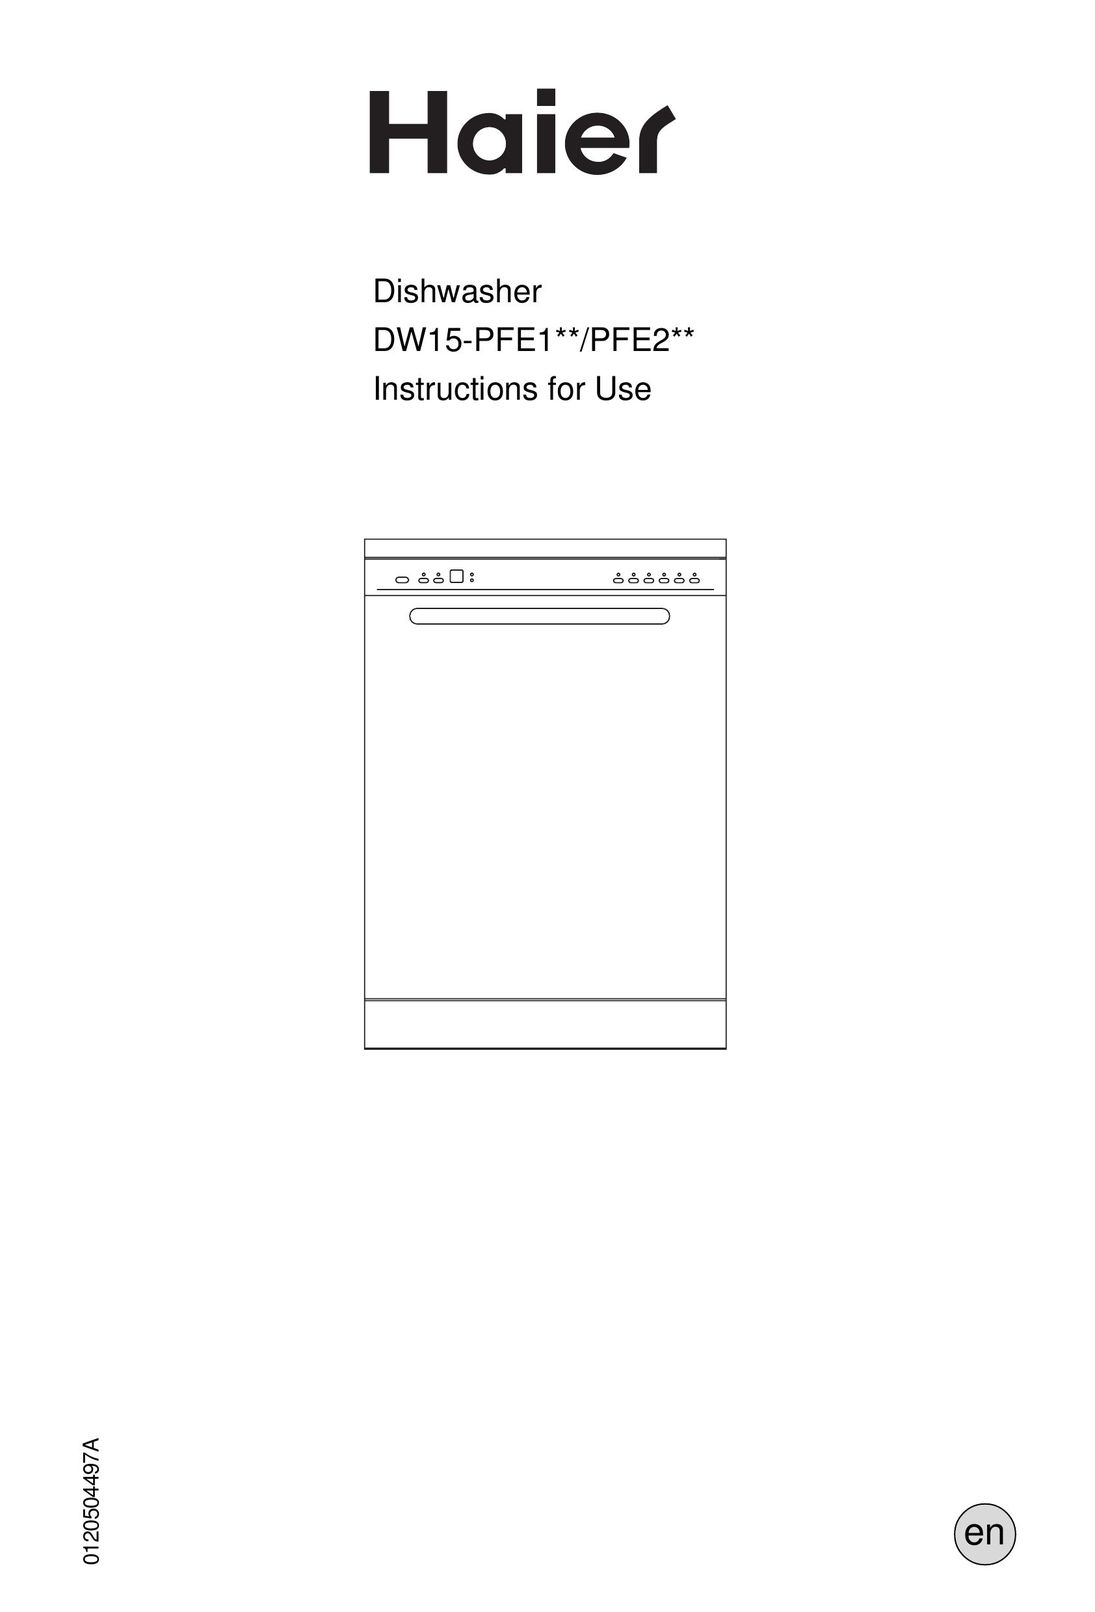 Haier DW15-PFE2 Dishwasher User Manual